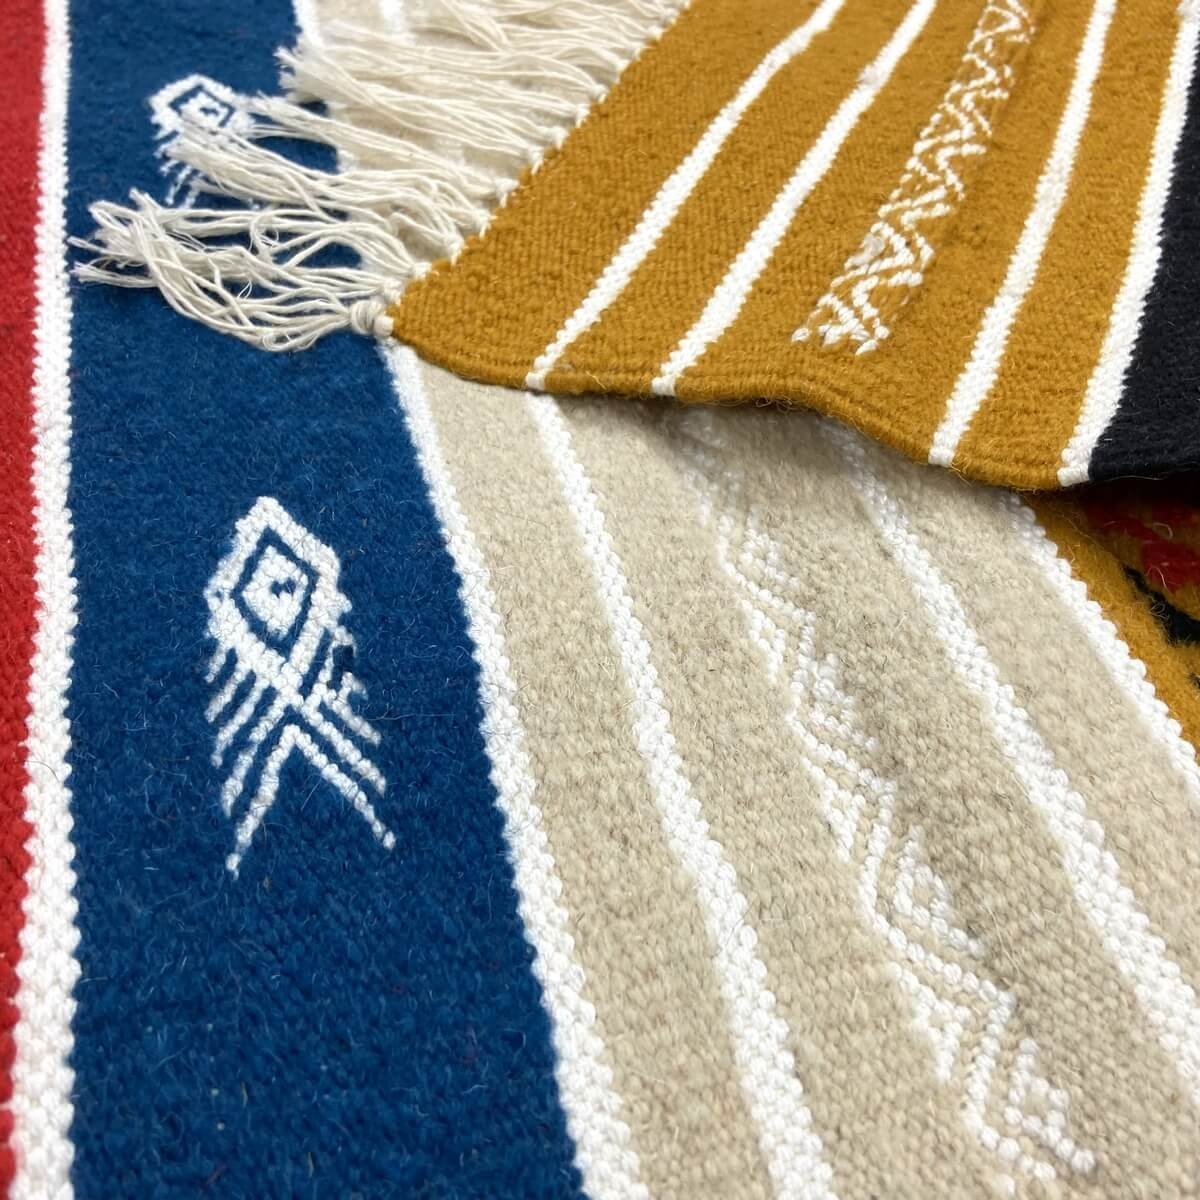 Tapete berbere Tapete Kilim longo Tadla 60x190 Multicor (Tecidos à mão, Lã) Tapete tunisiano kilim, estilo marroquino. Tapete re